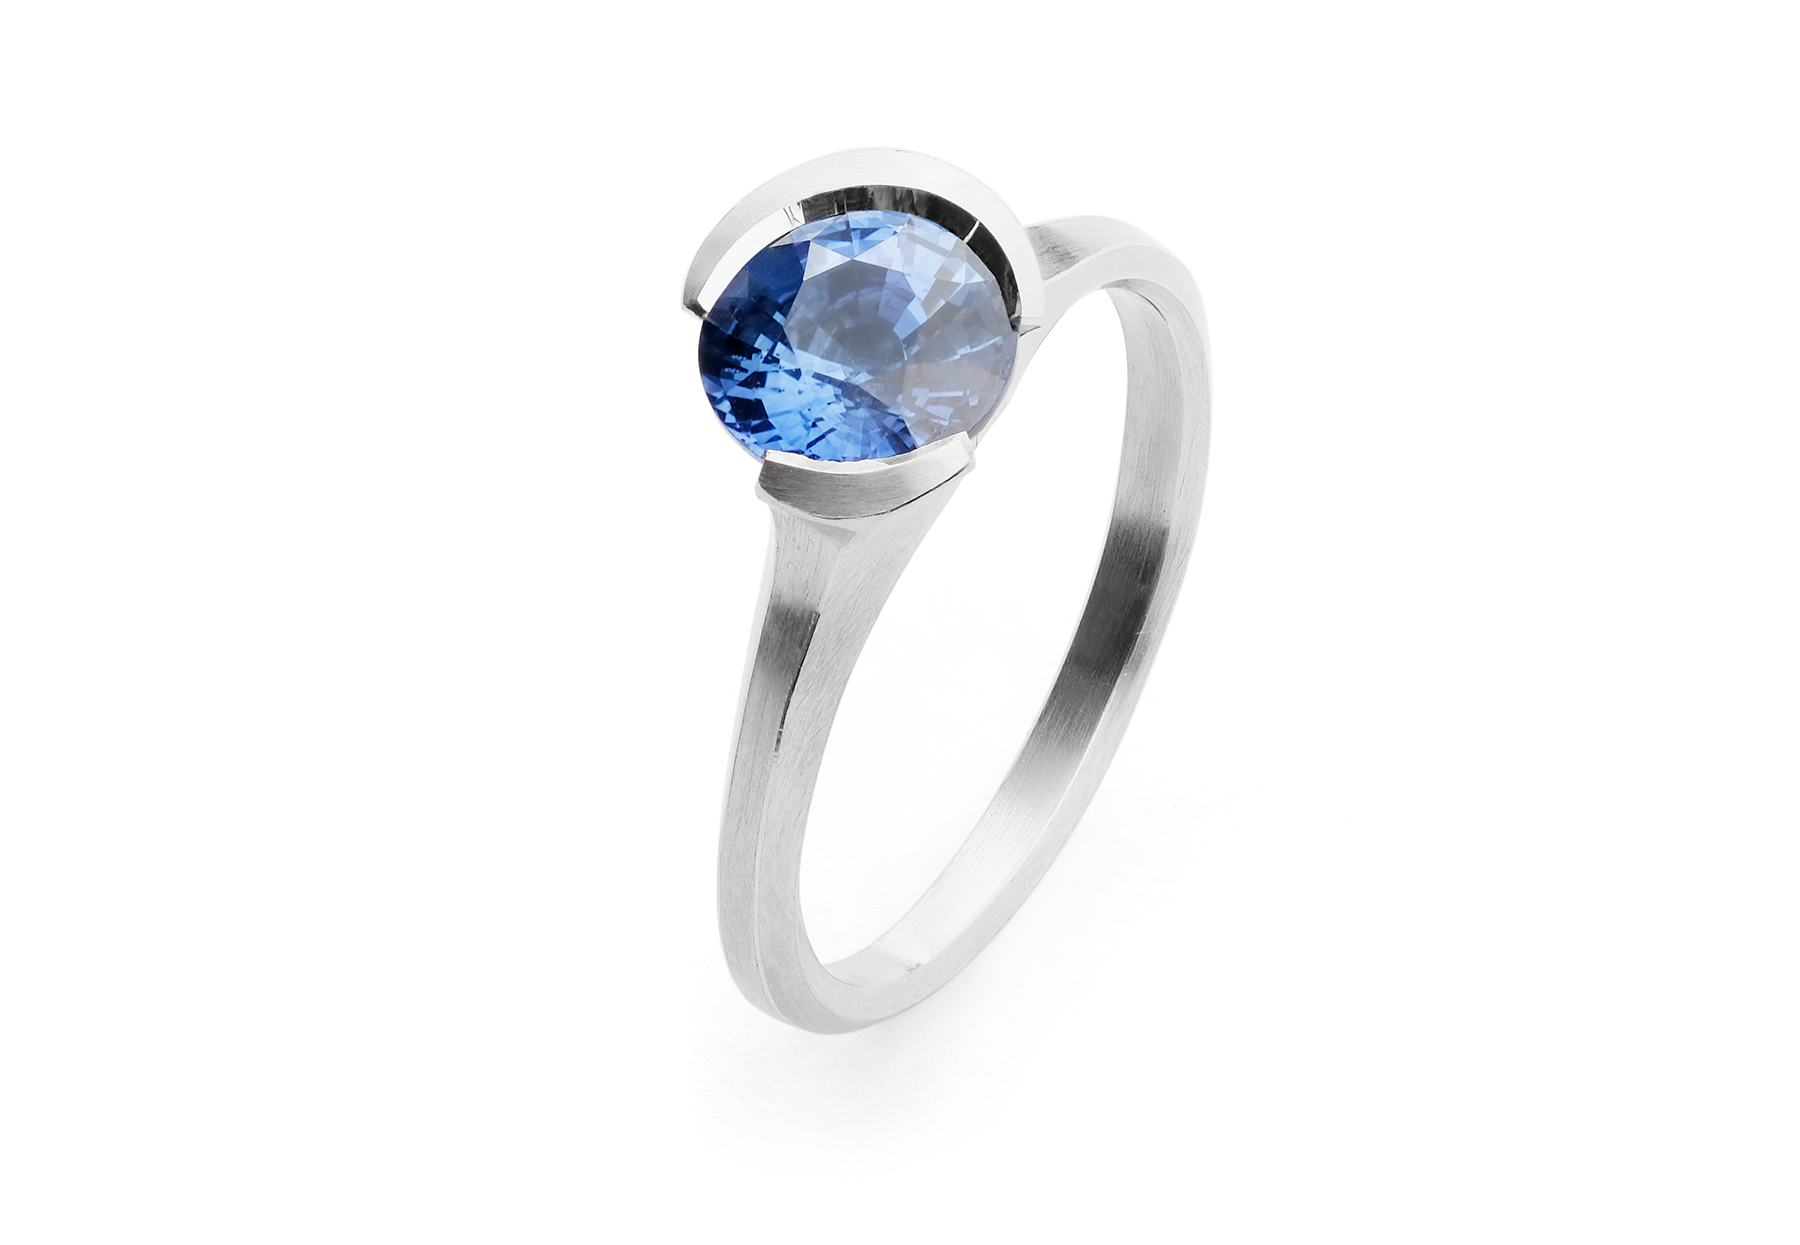 Arris modern platinum engagement ring with round blue sapphire